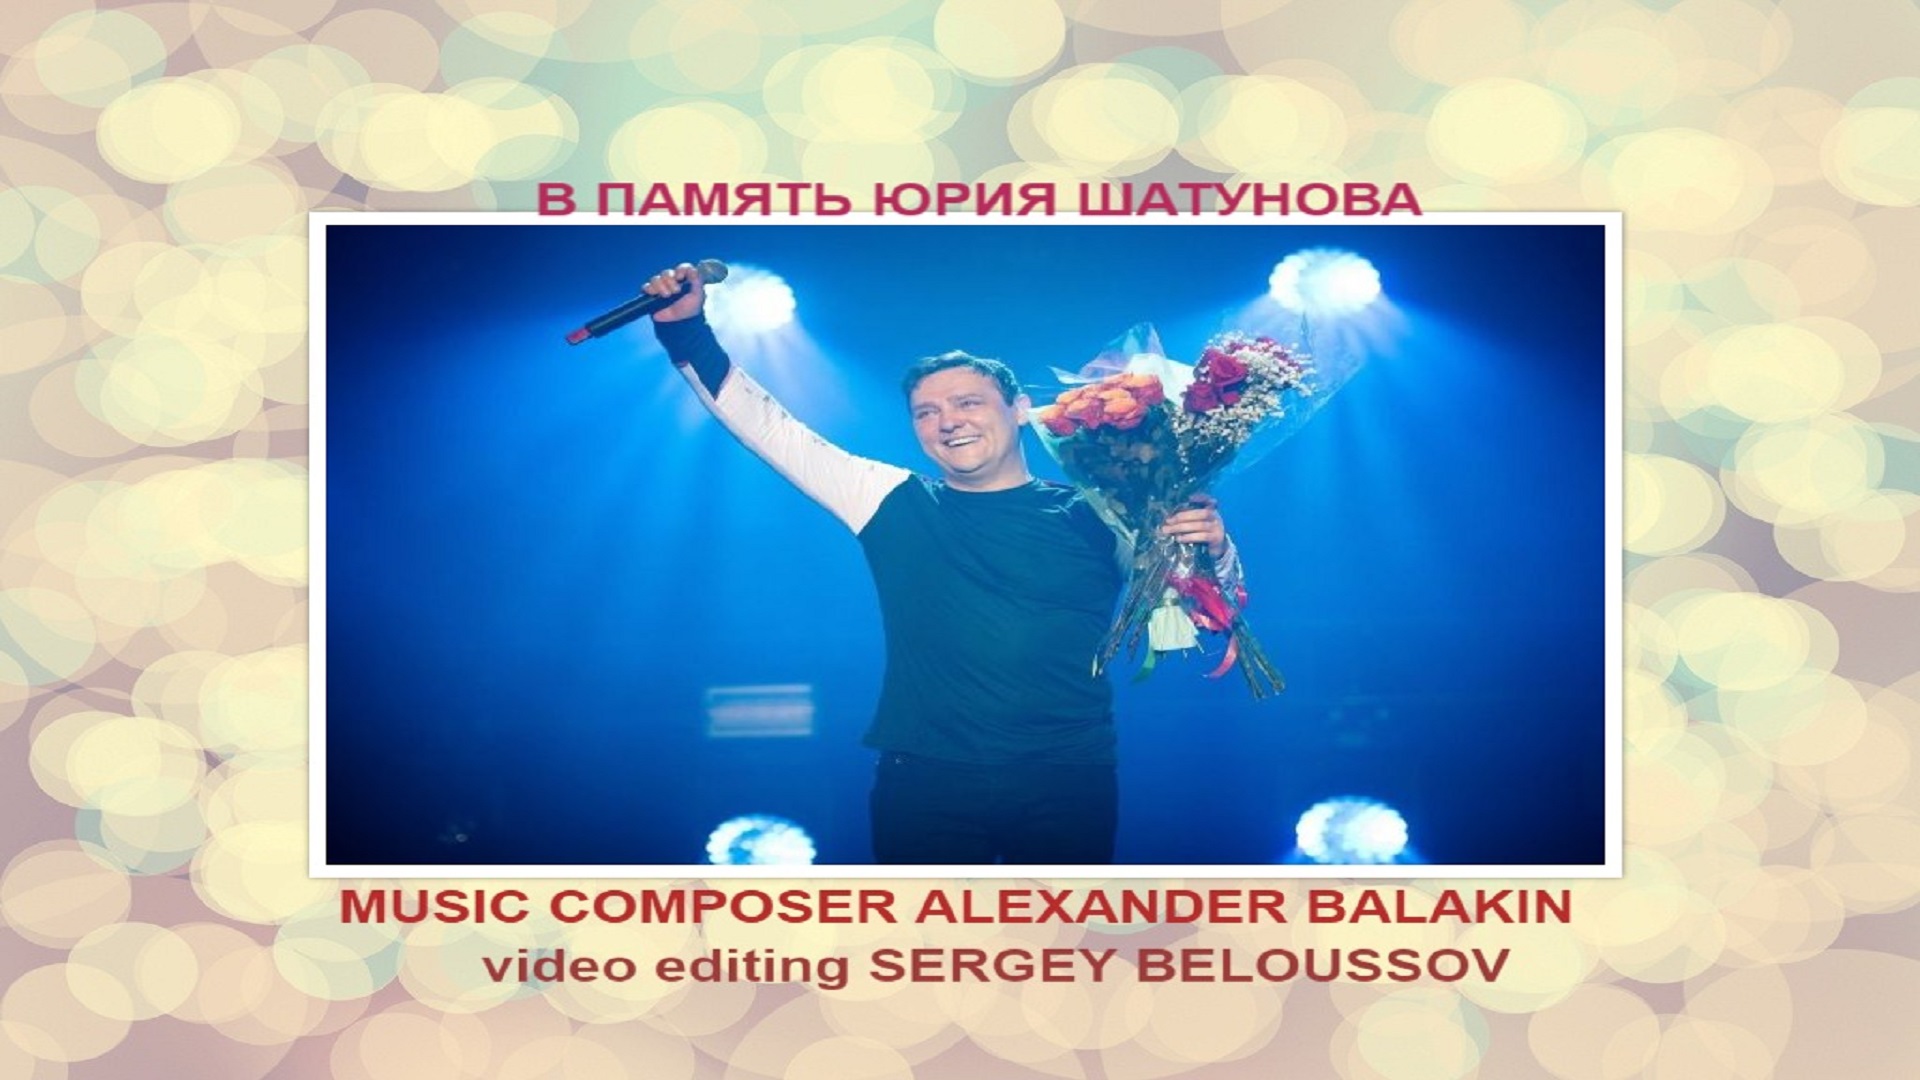 Песня шамана на концерте памяти шатунова